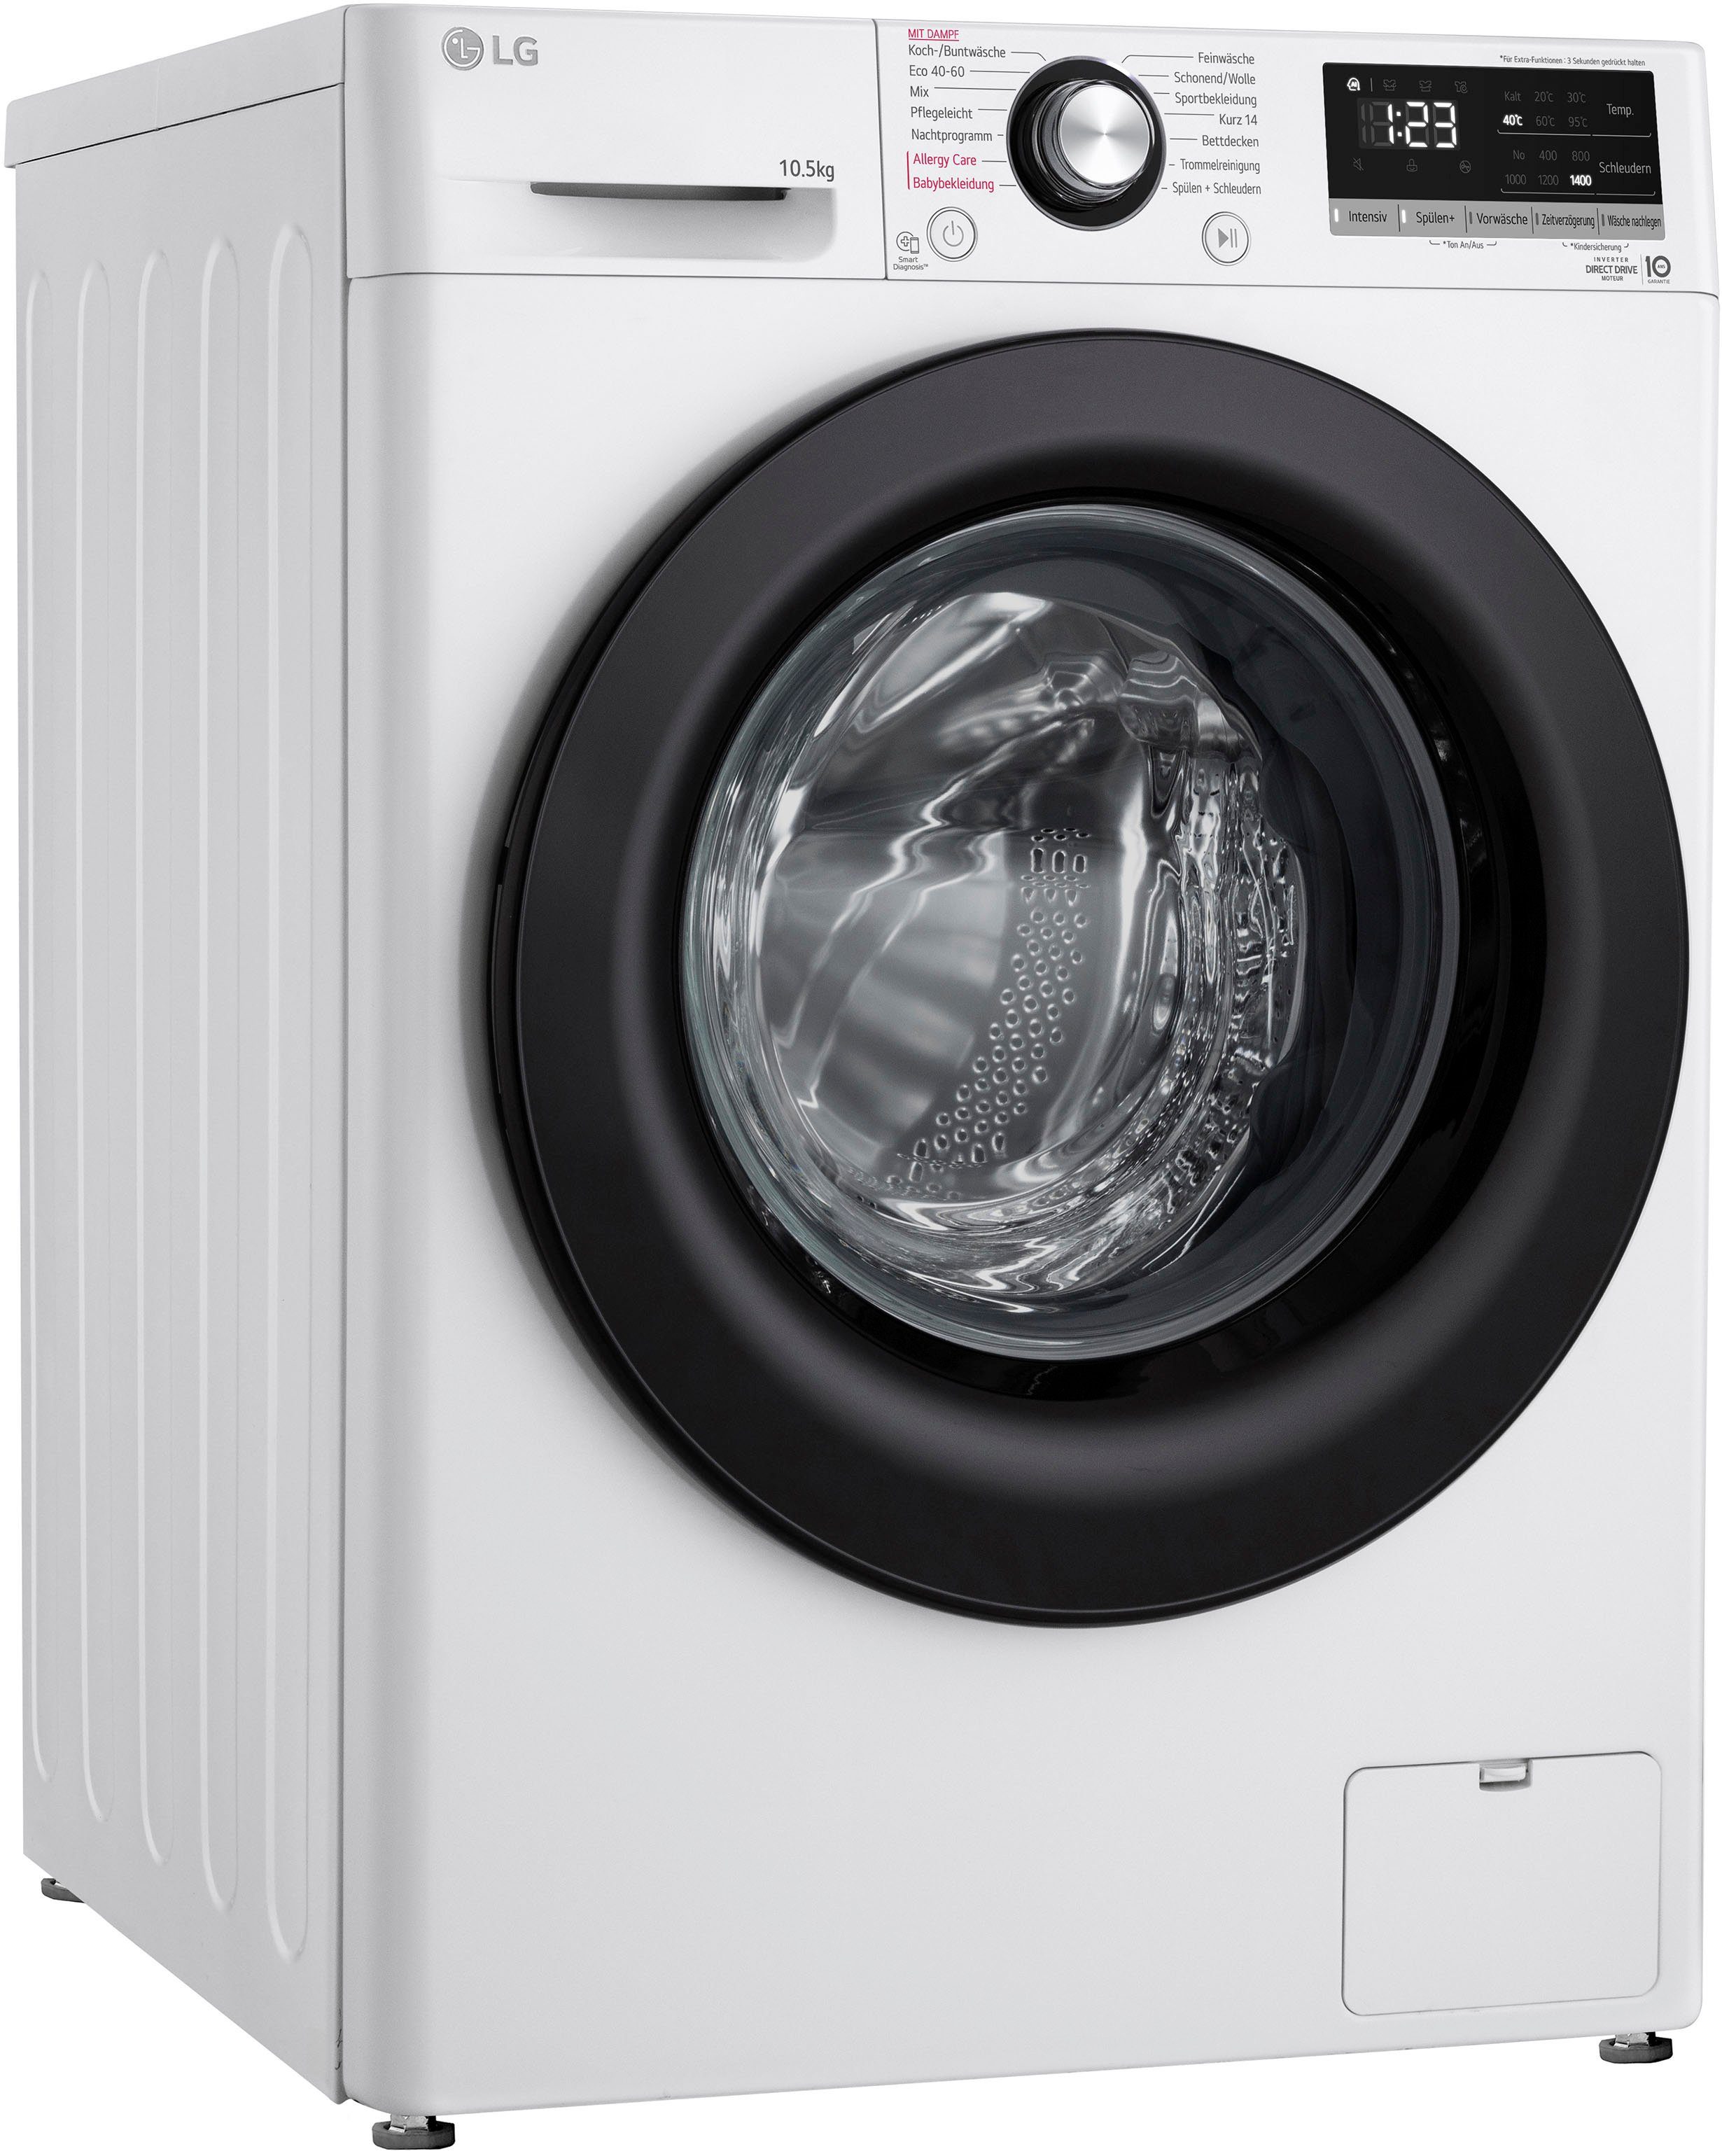 LG Waschmaschine F4WV40X5, 10,5 Inverter Drive® U/min, Direct kg, 1400